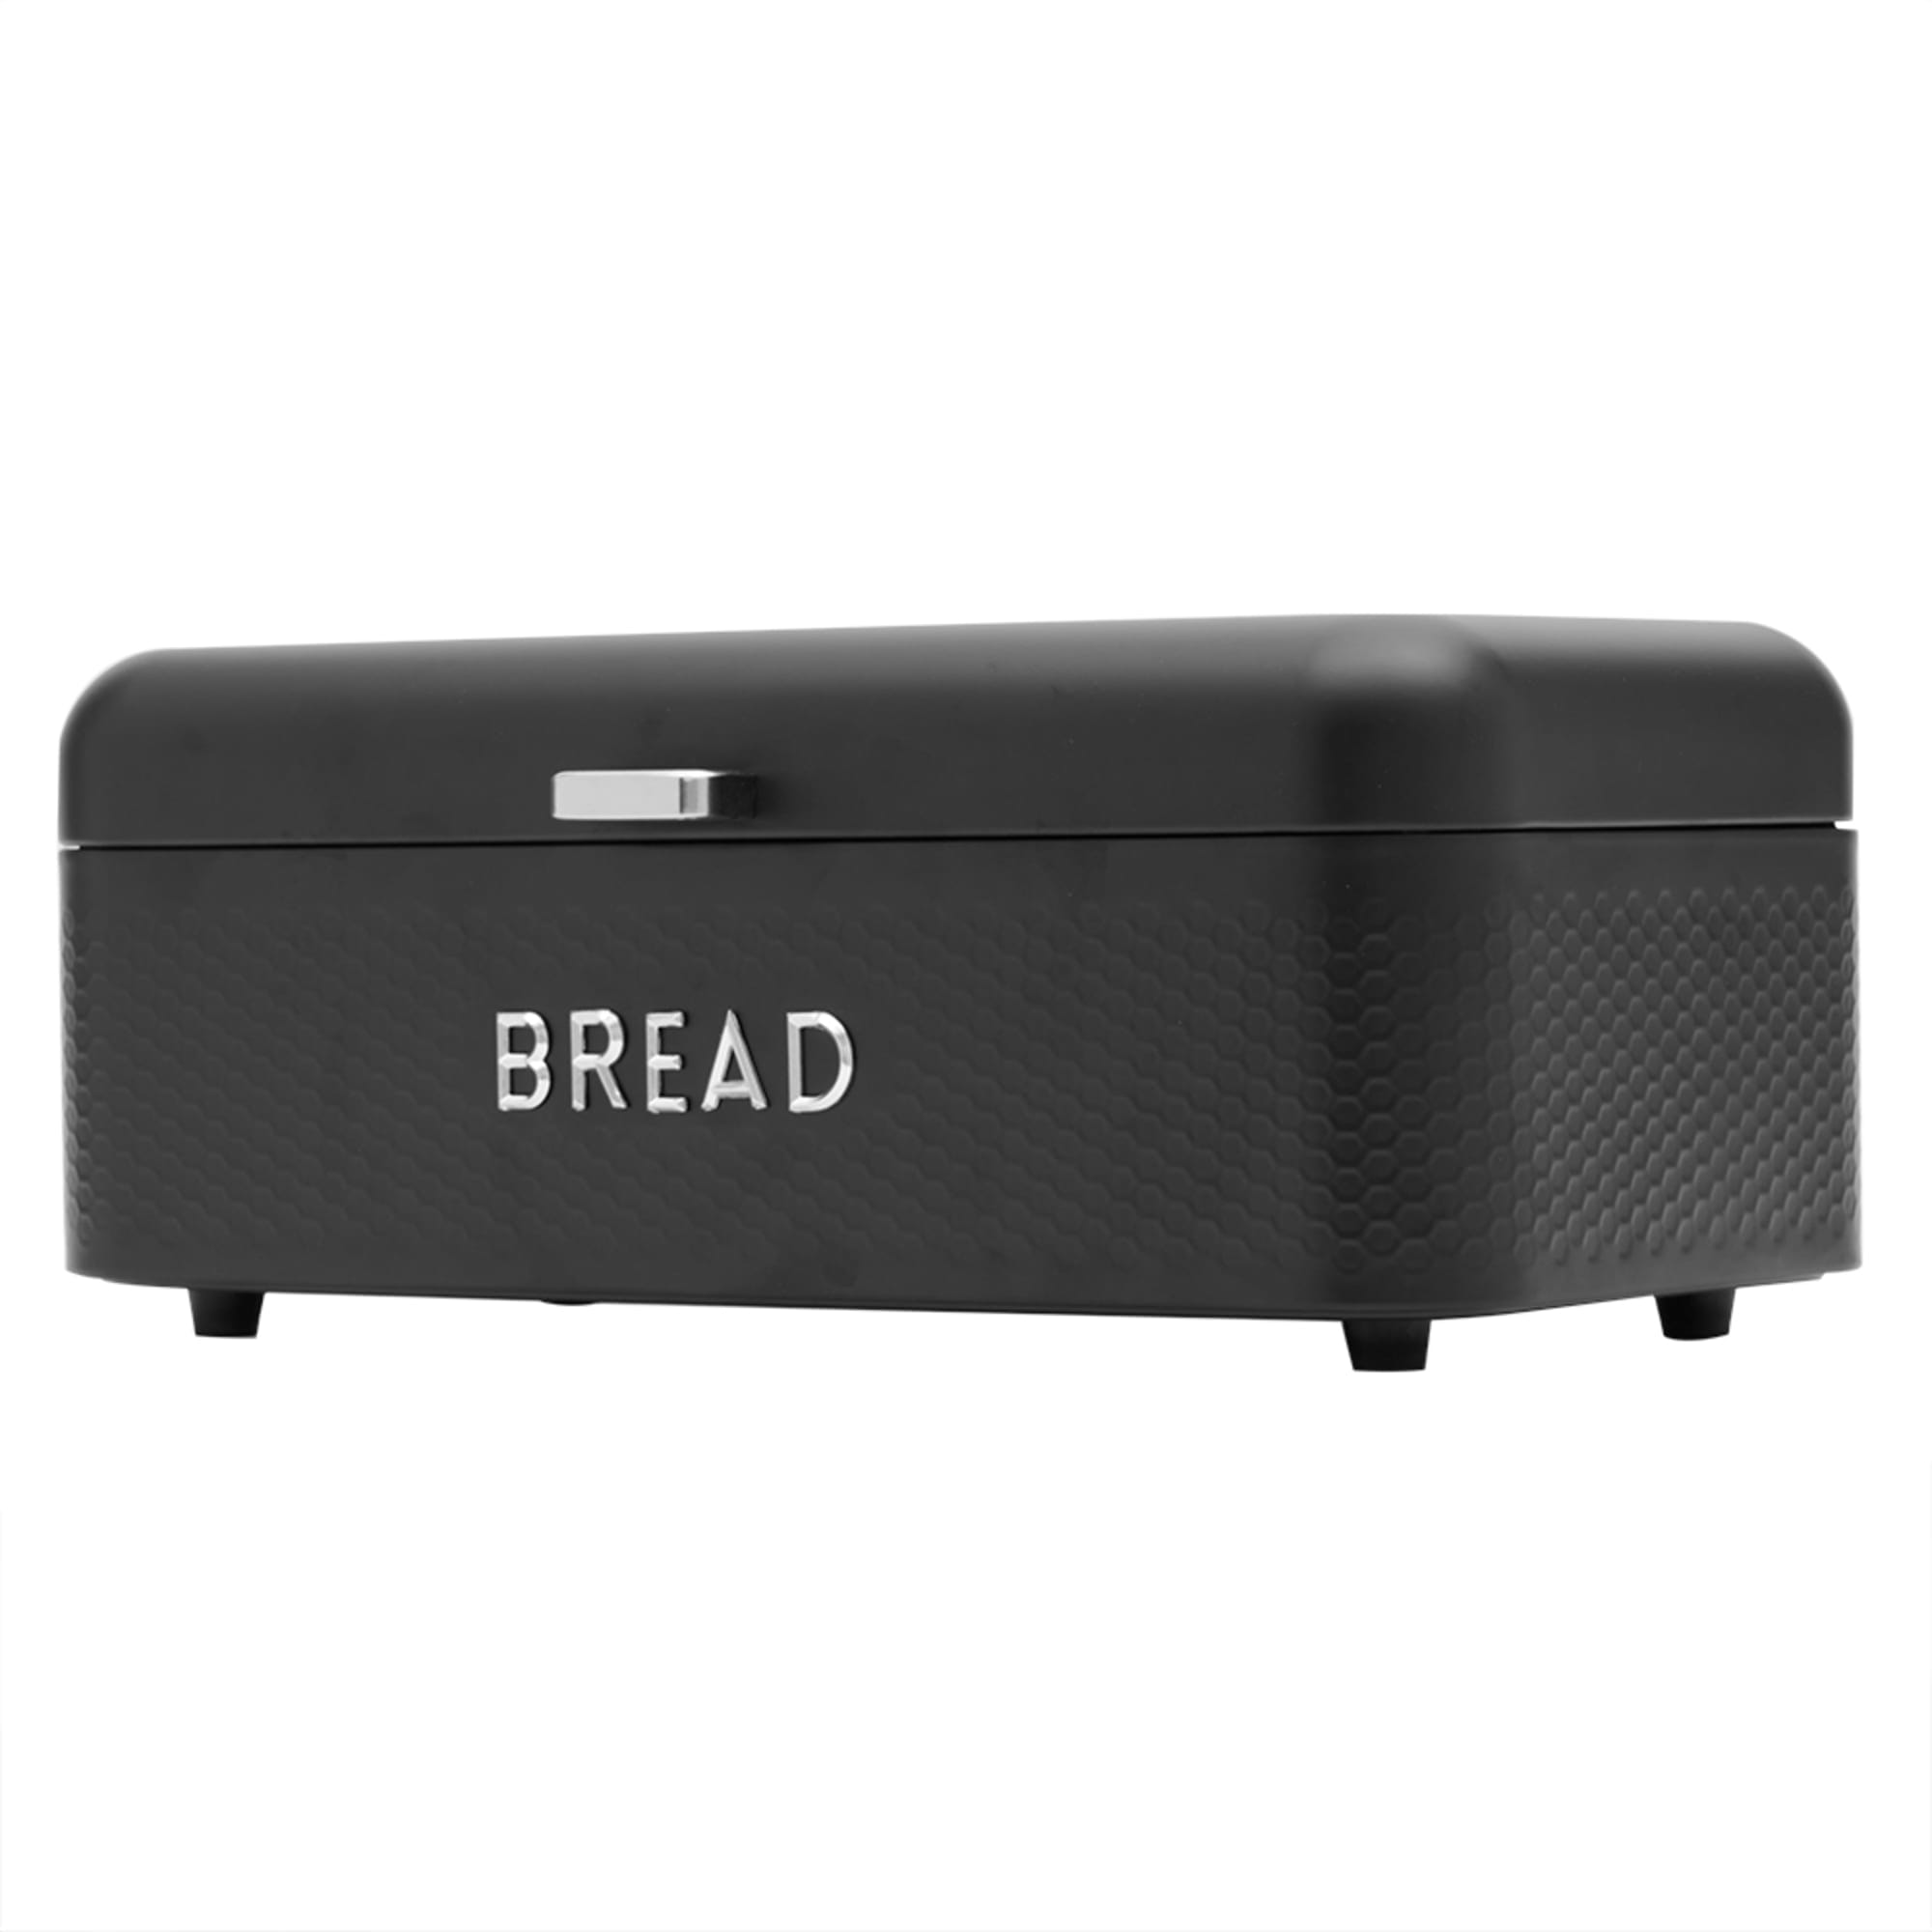 Home Basics Soho Metal Bread Box, Black $25.00 EACH, CASE PACK OF 4